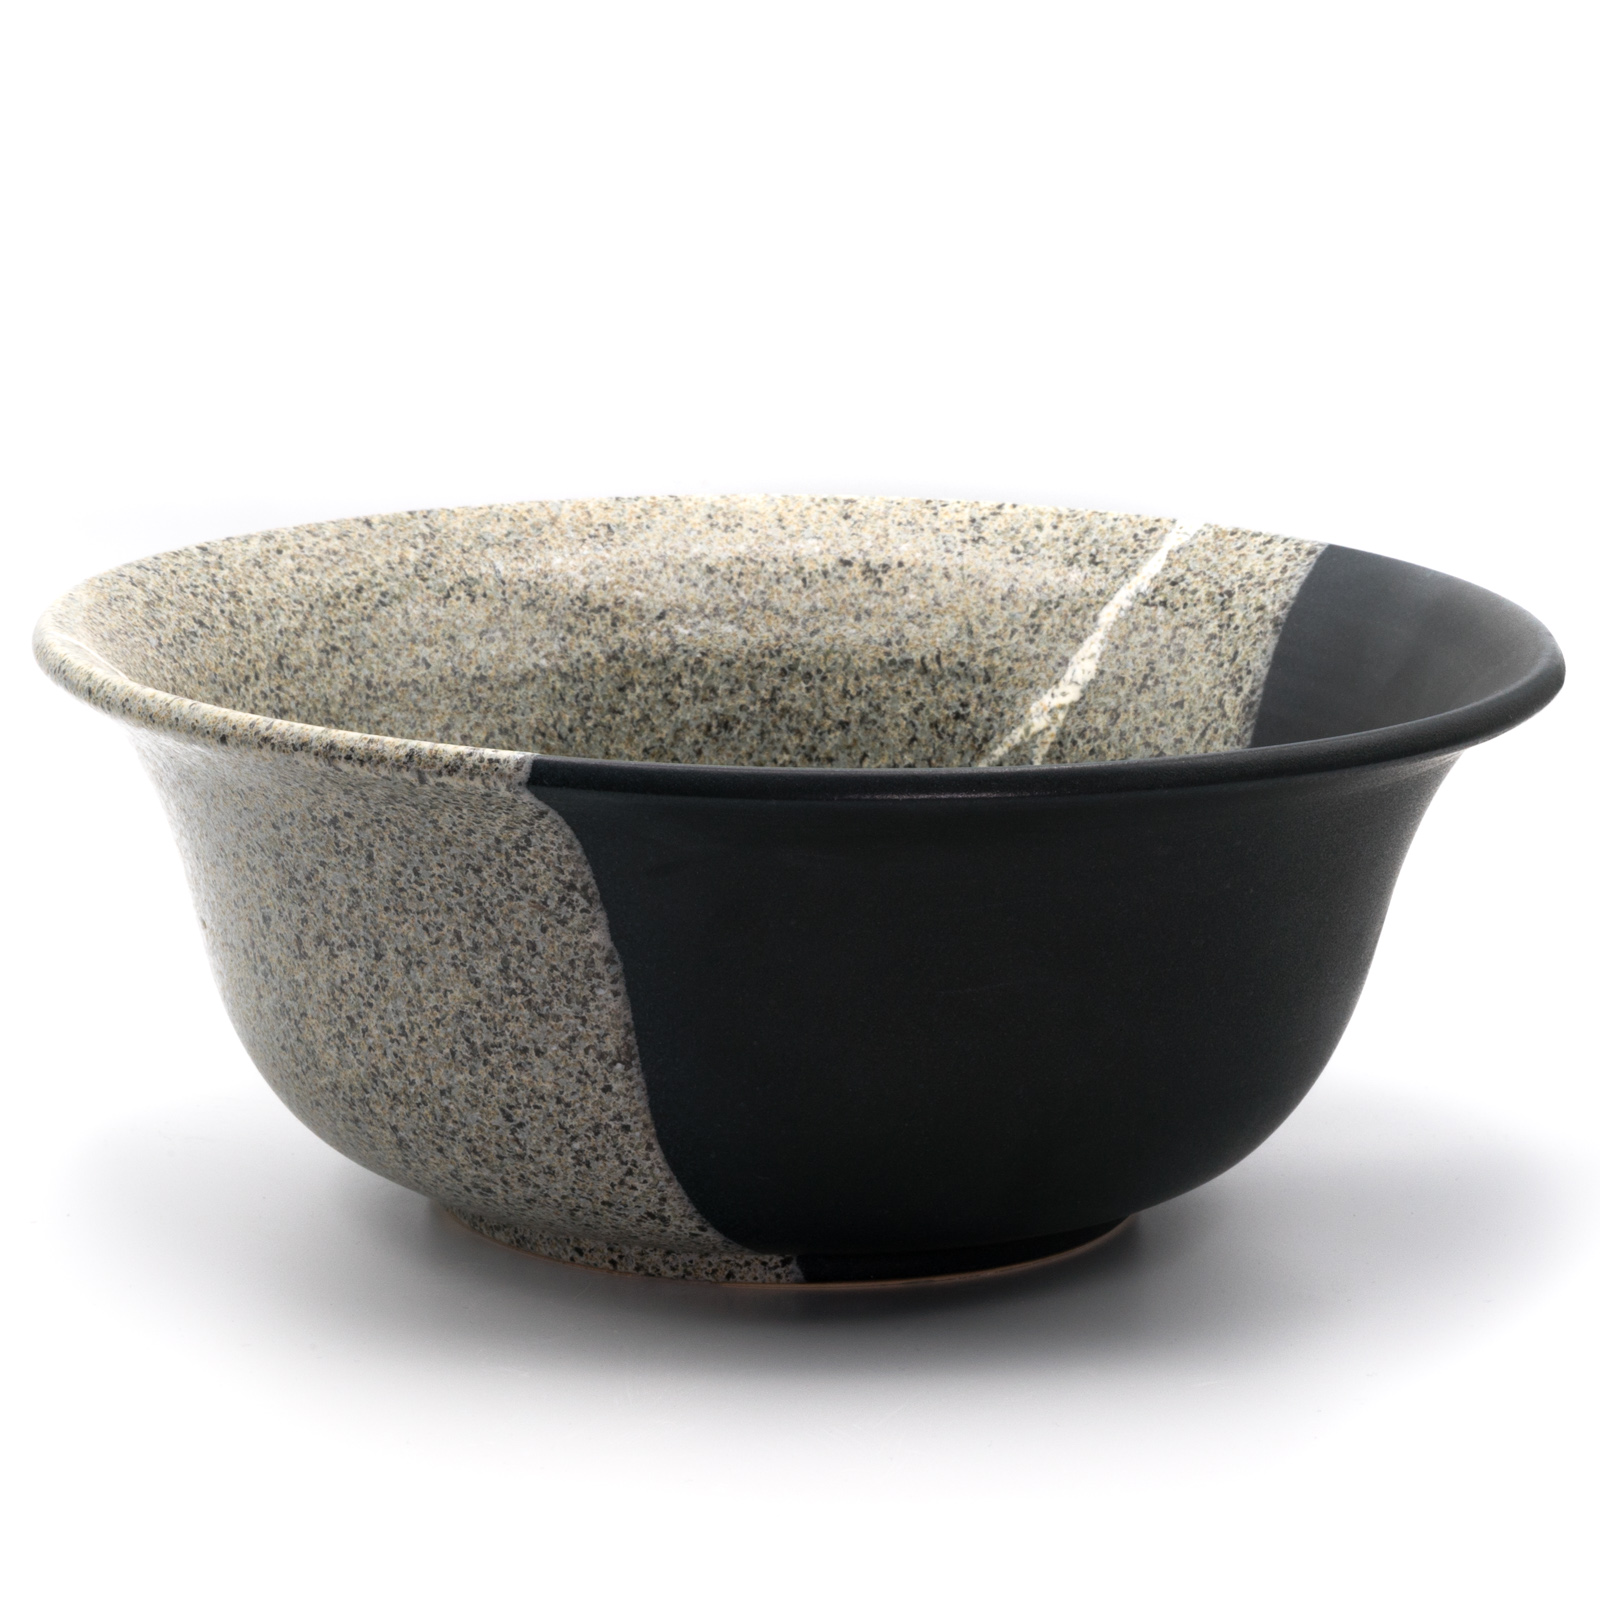 Salatschüssel Keramik | große Salatschüssel schwarz